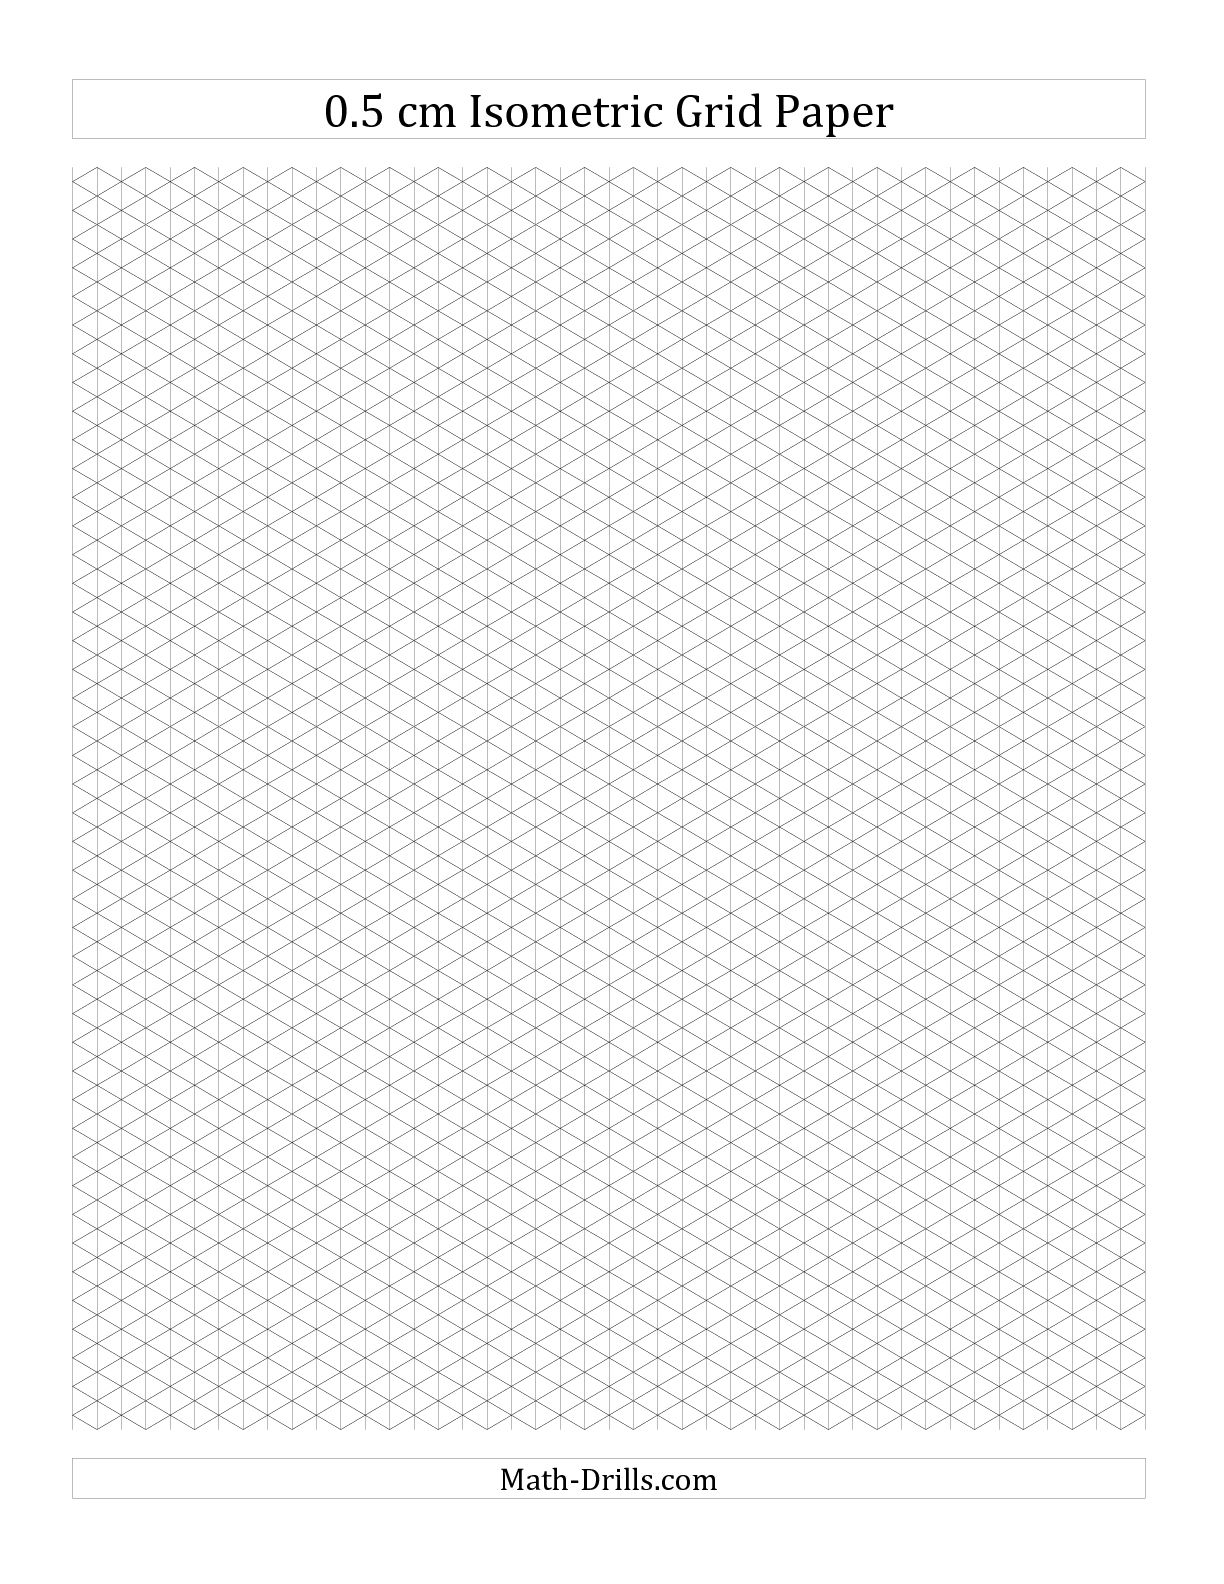 Printable isometric graph paper grid